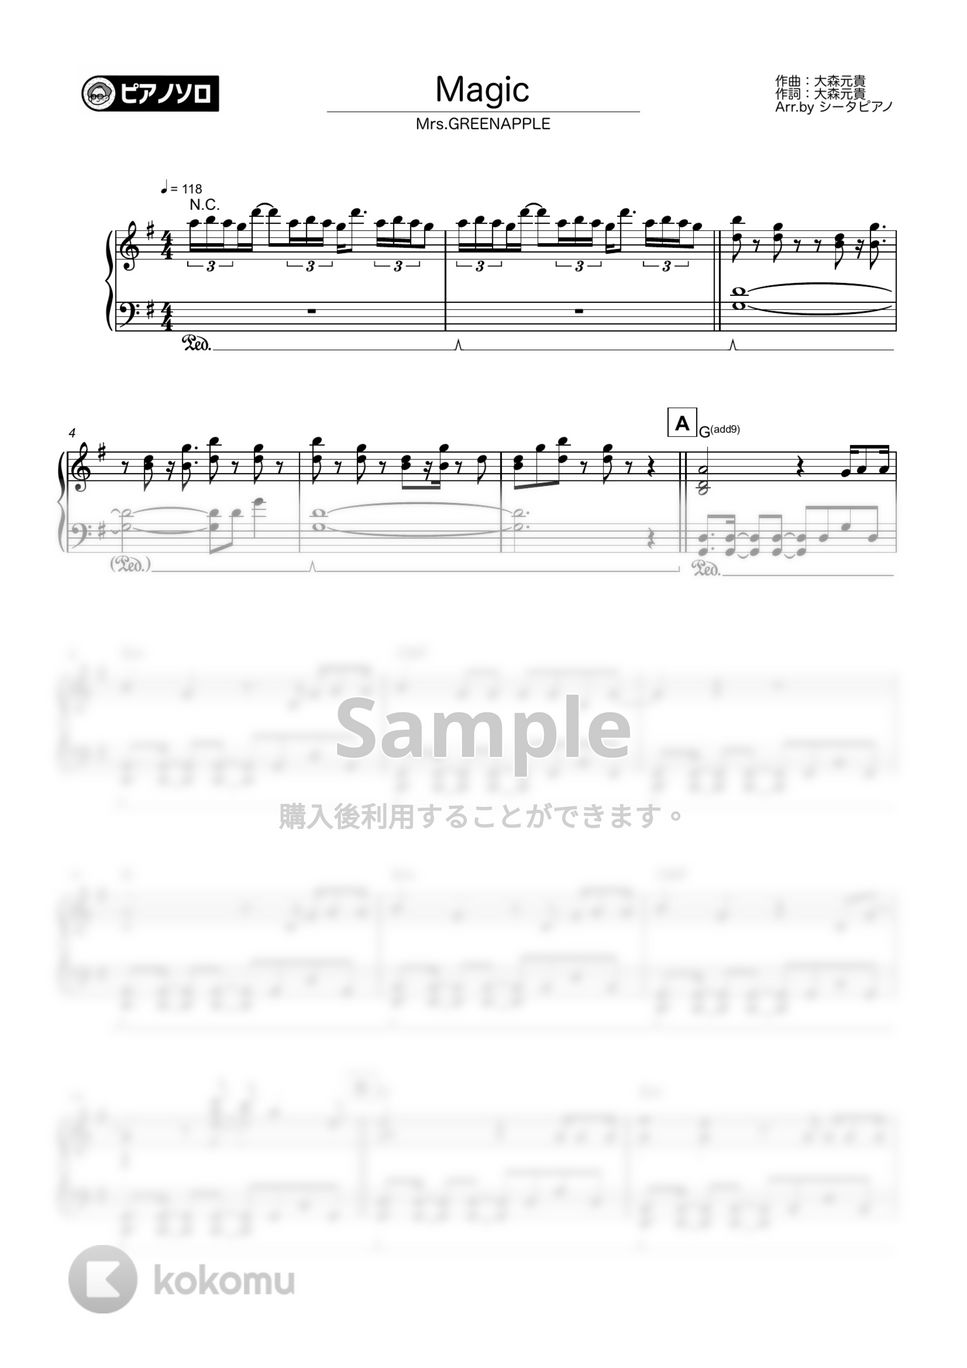 Mrs.GREENAPPLE - MAGIC by シータピアノ